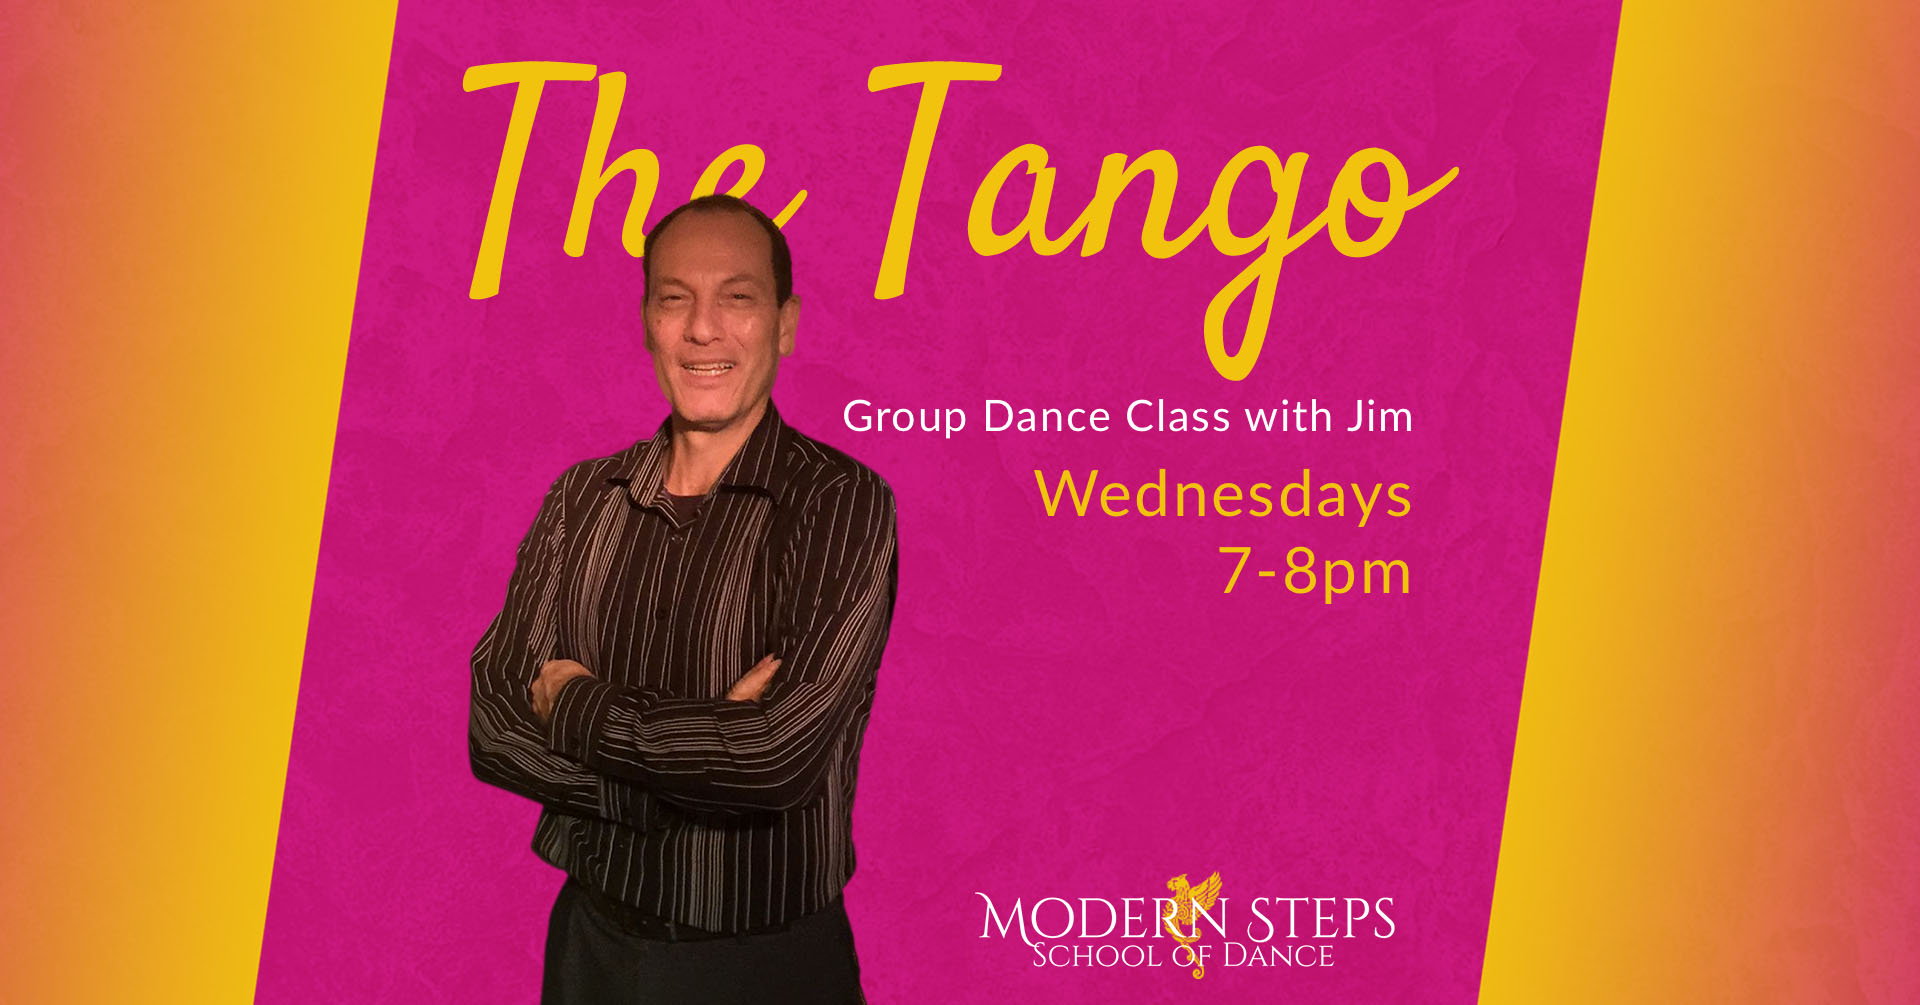 Modern Steps School of Dance Naples Florida The Tango Dance Classes - Group Ballroom Dance Lessons - Naples Florida Things to Do